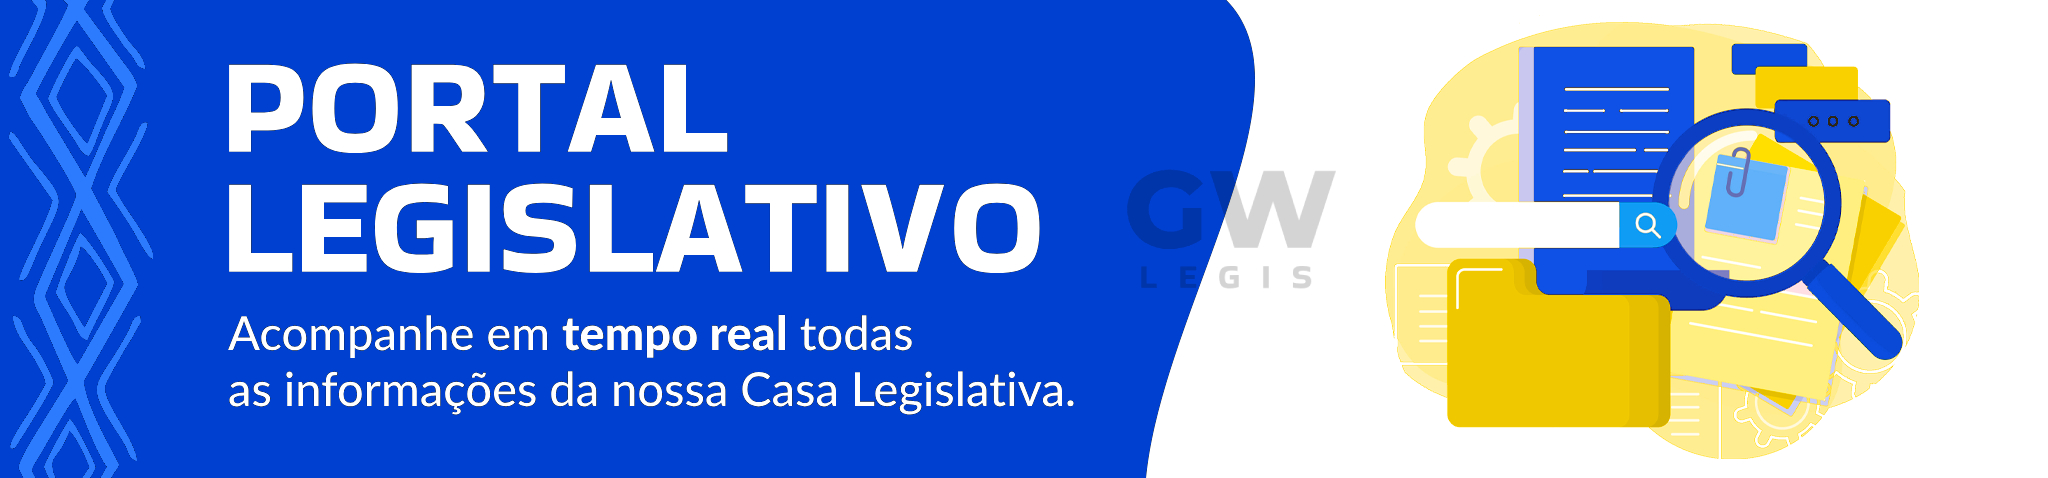 Banner Portal Legislativo